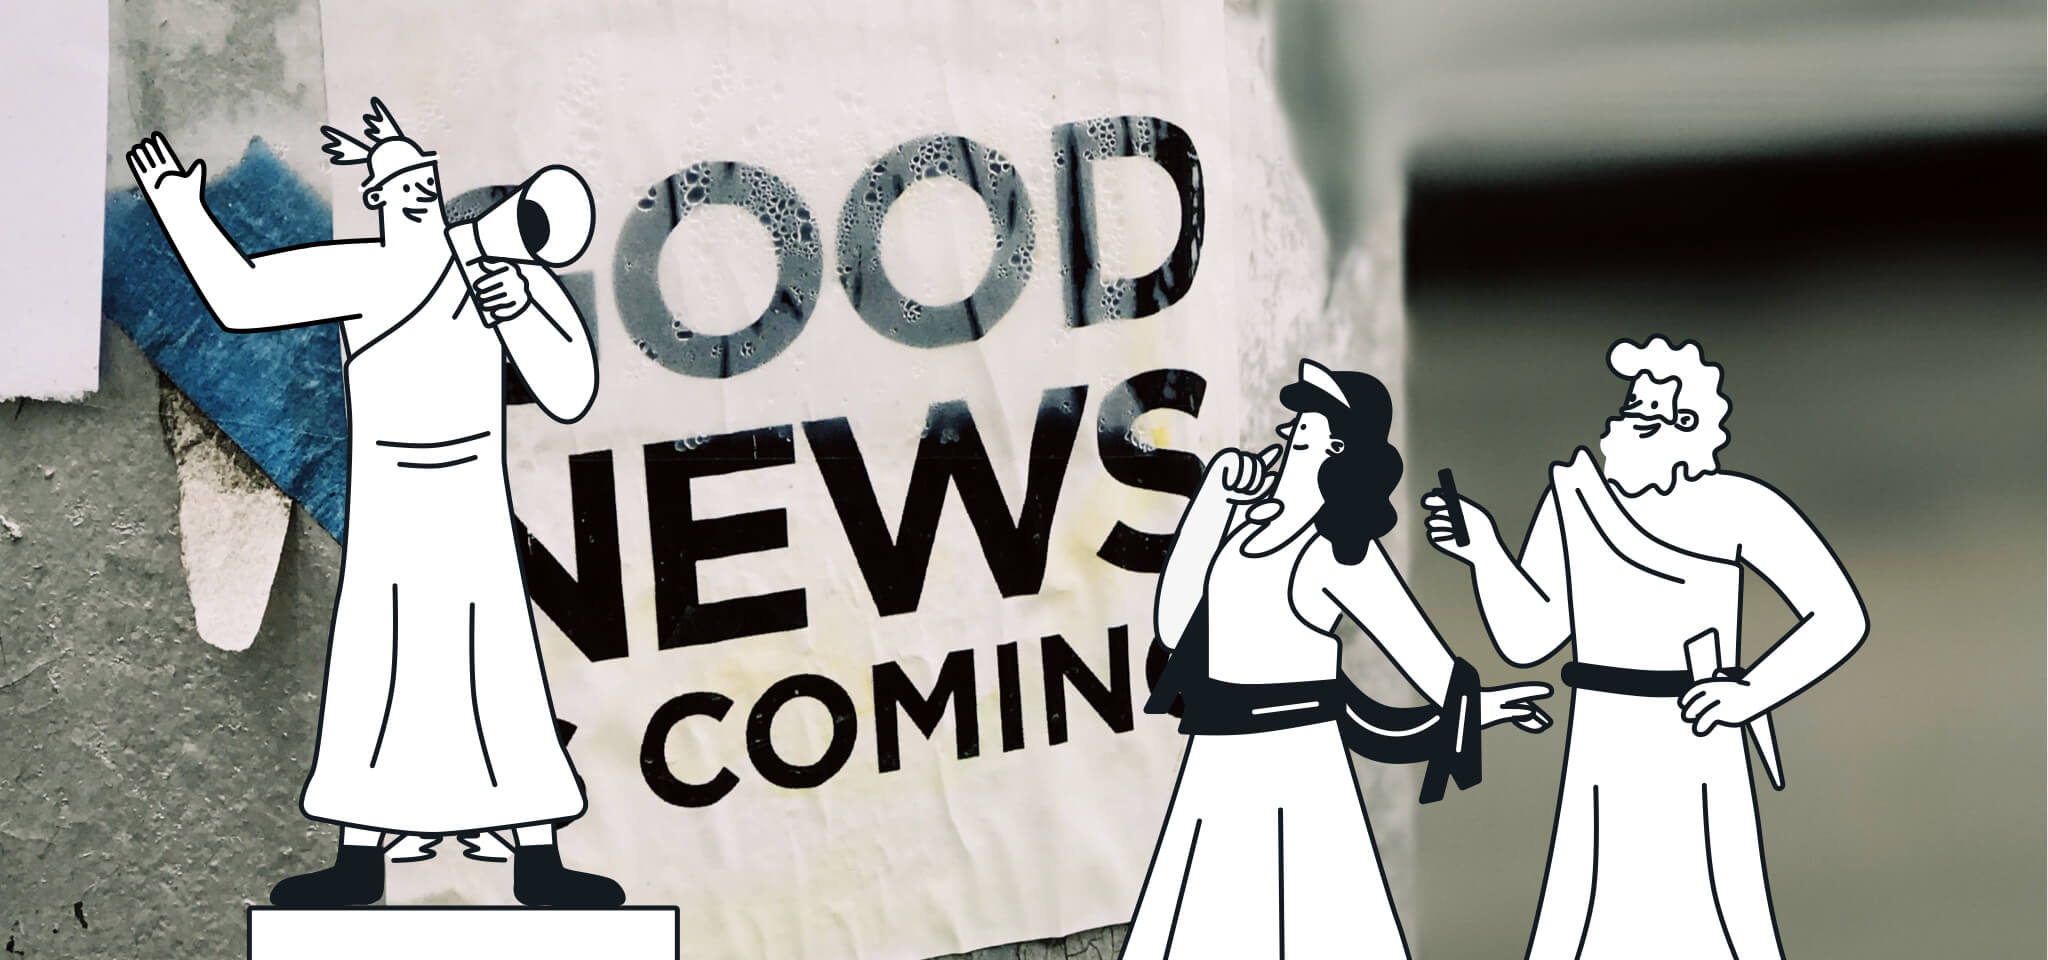 Hermes announcing good news to gods